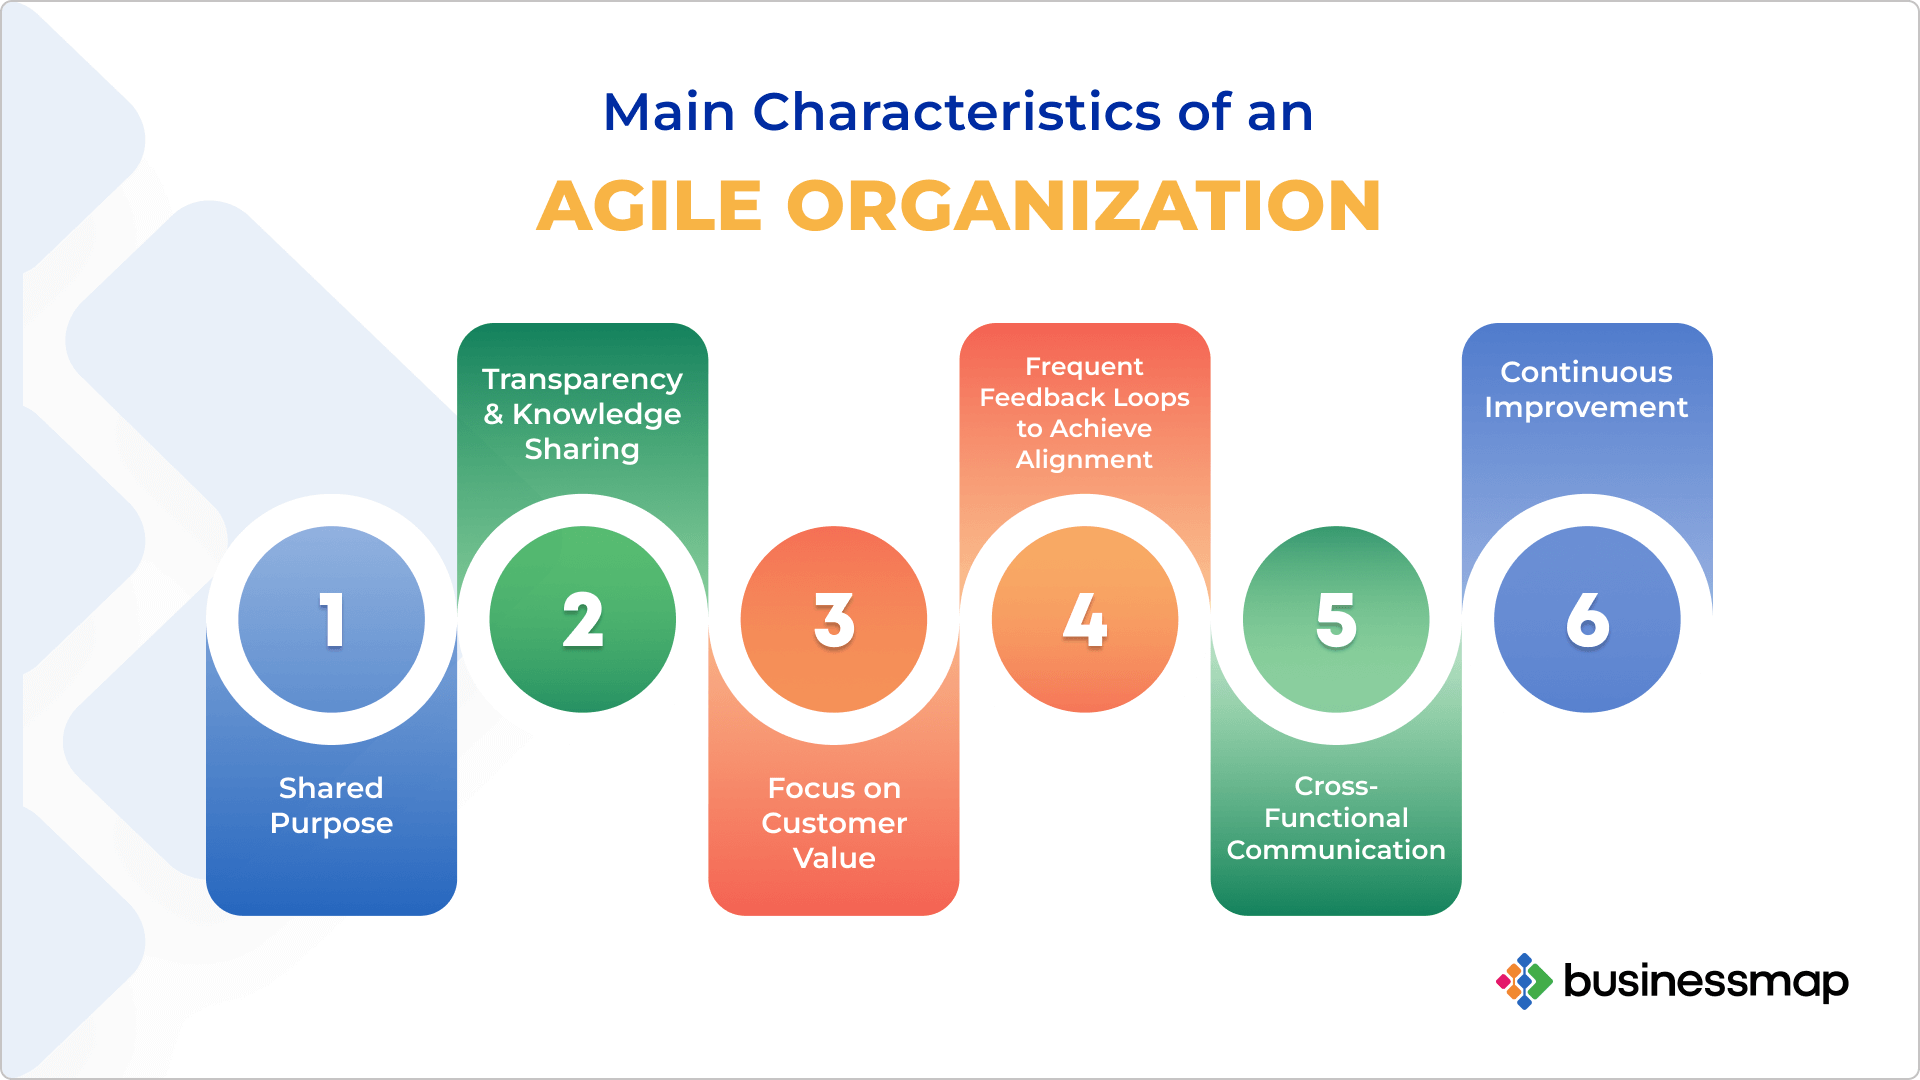 Agile organization characteristics